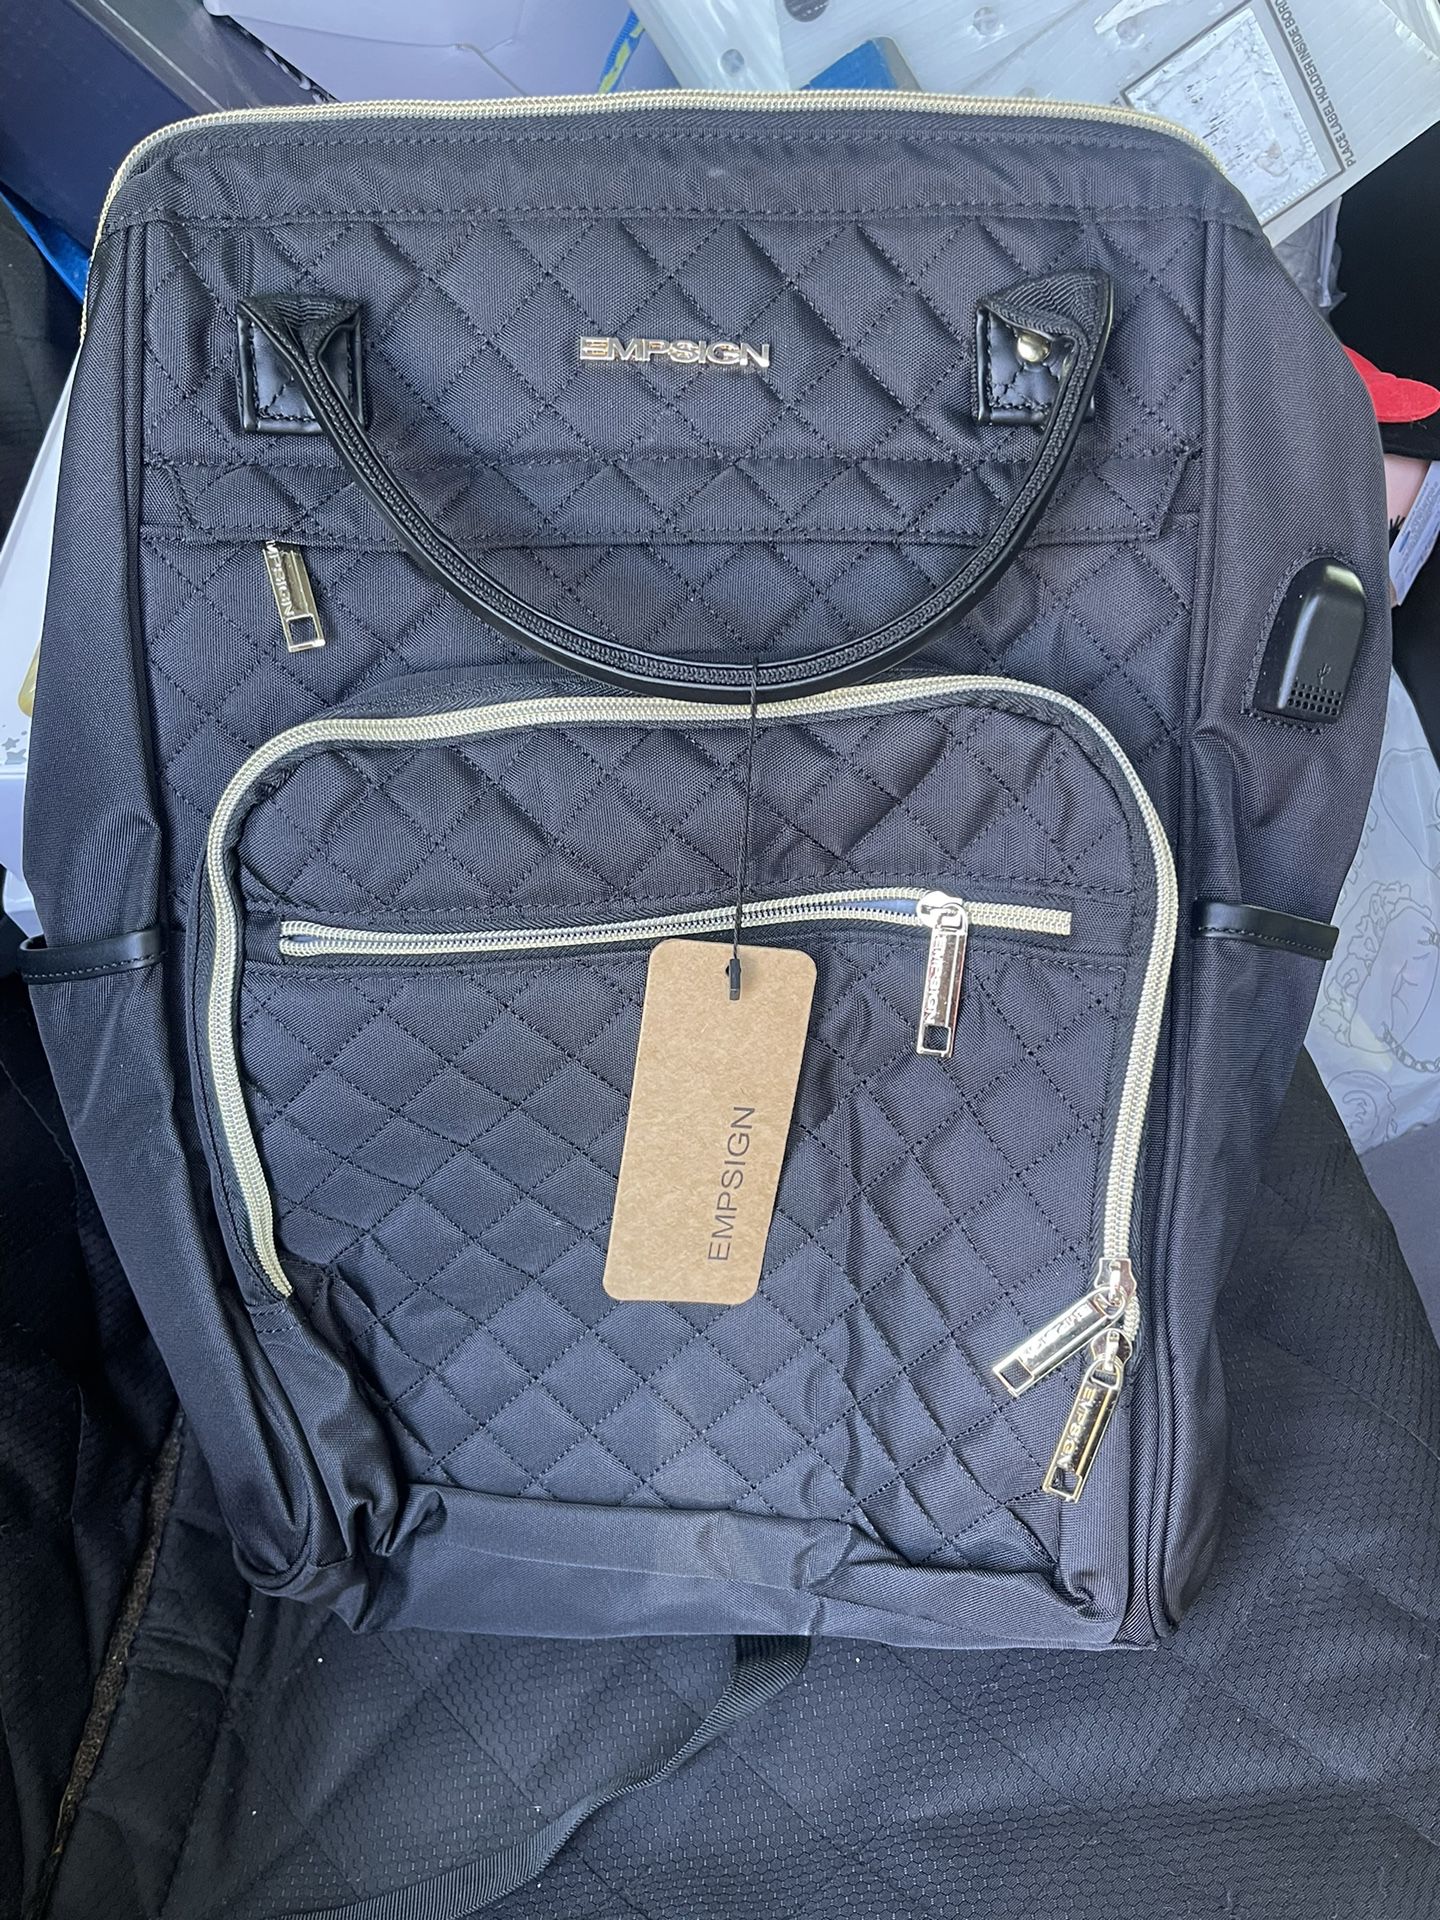 EMPSIGN Laptop Backpack for Women